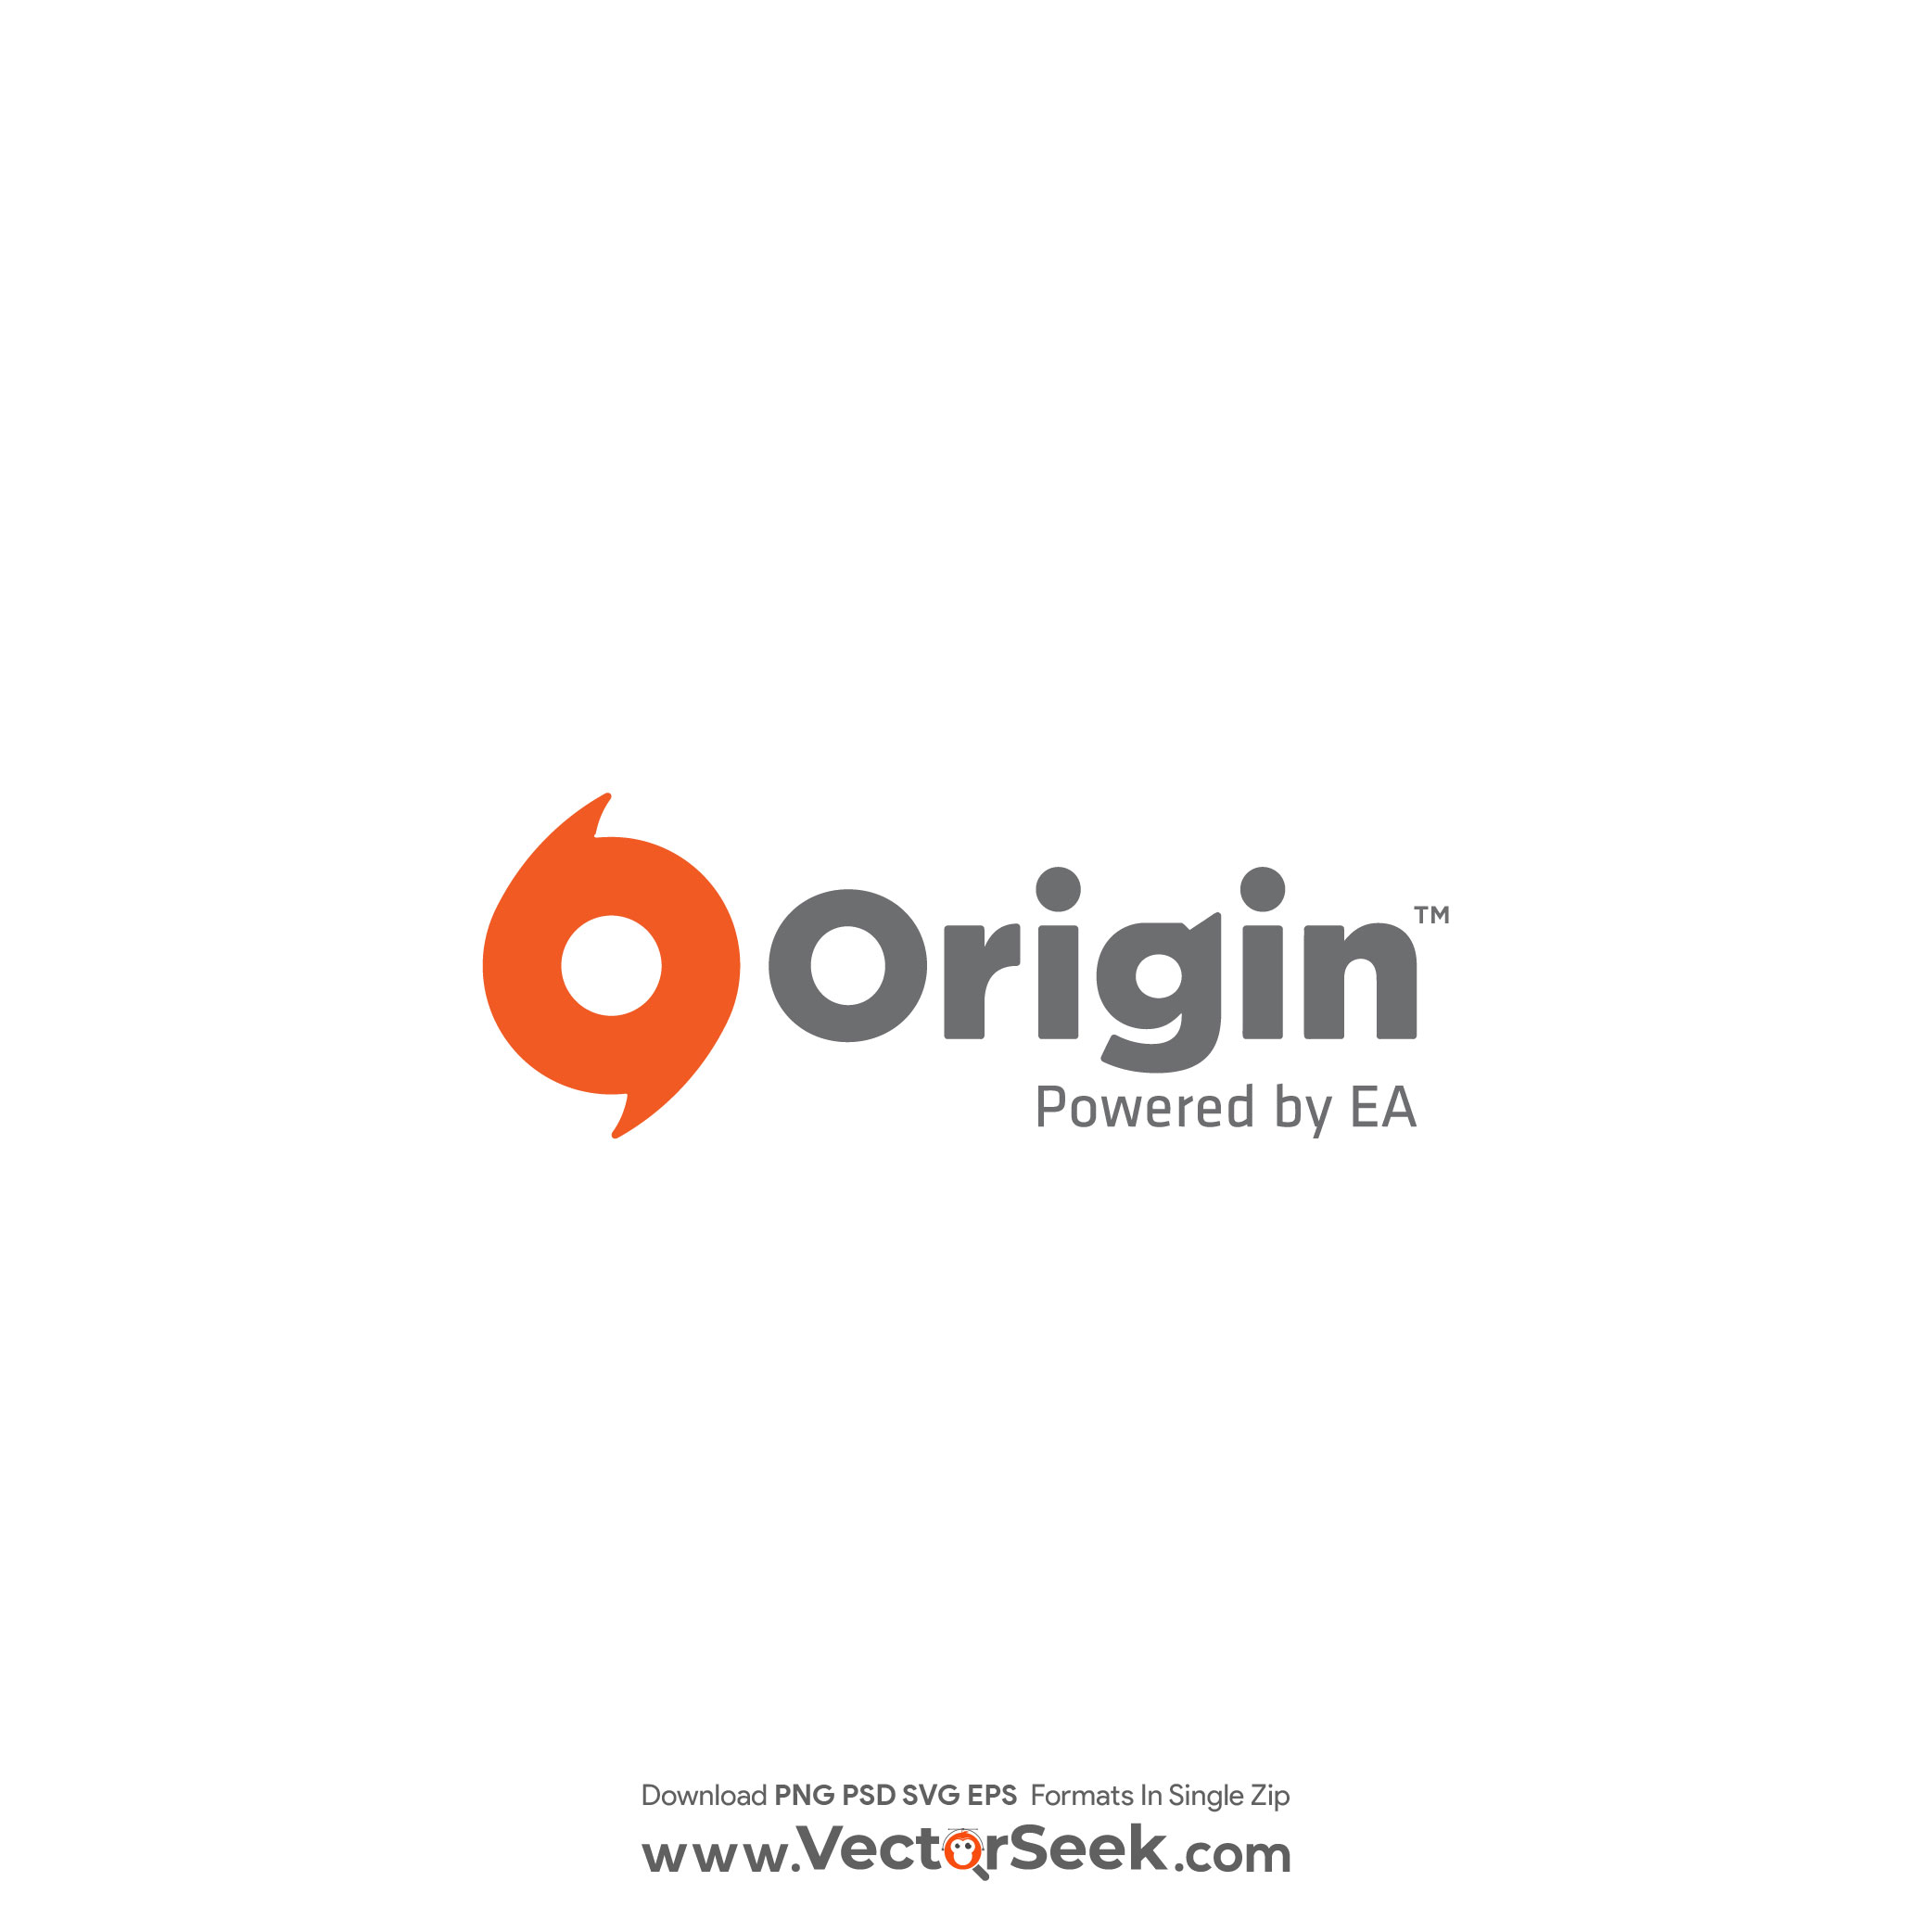 Origin Logo Vector